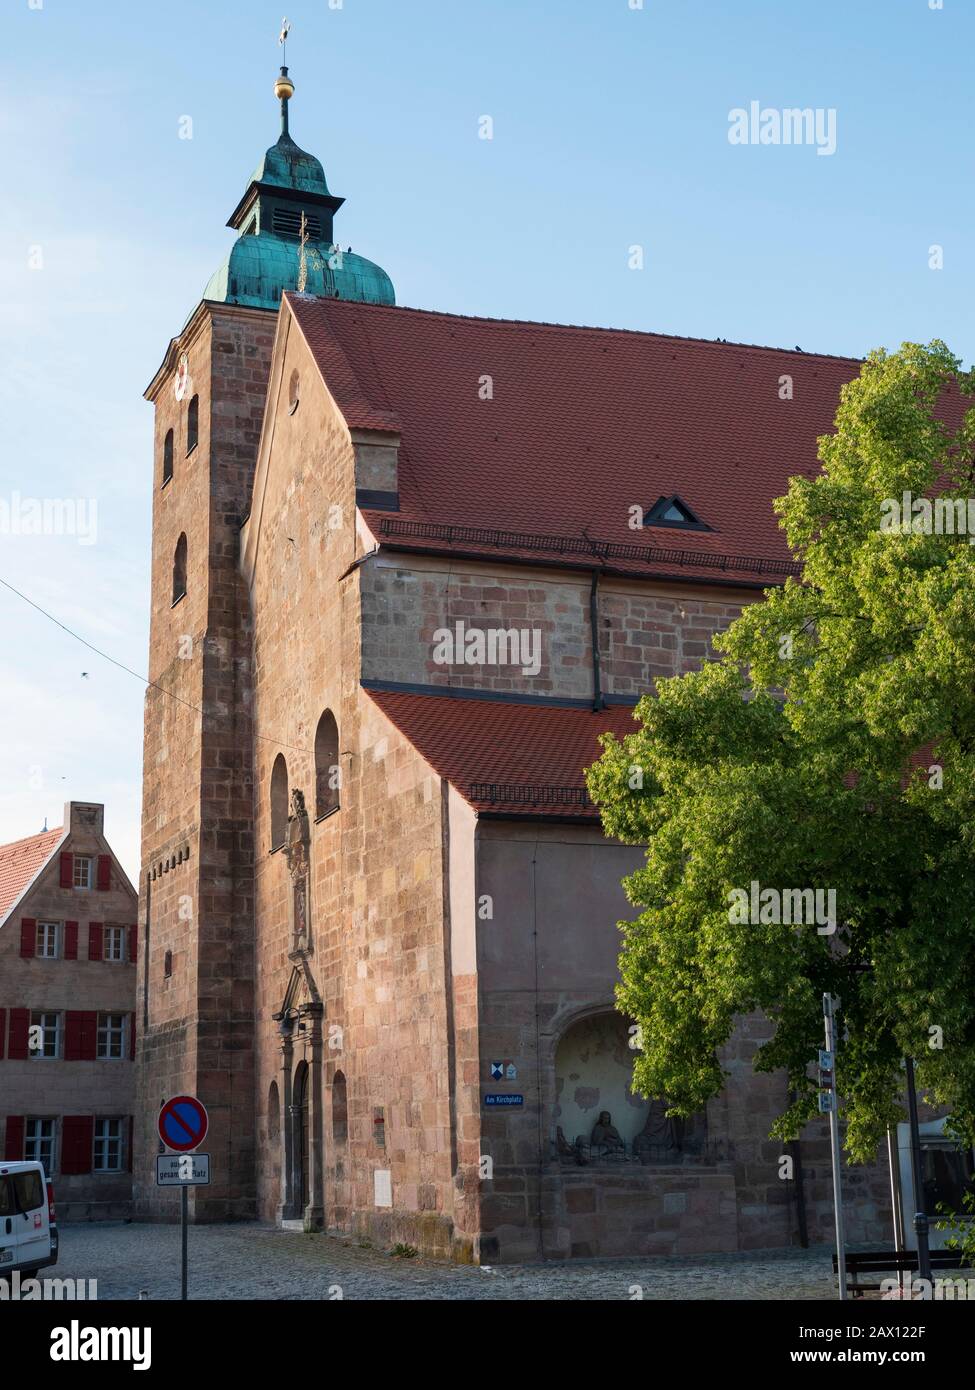 Kirche St. Emmeran, Spalt Altstadt, Franken, Bayern, Deutschland | church St. Emmeran, old town of Spalt, Franconia, Bavaria, Germany Stock Photo